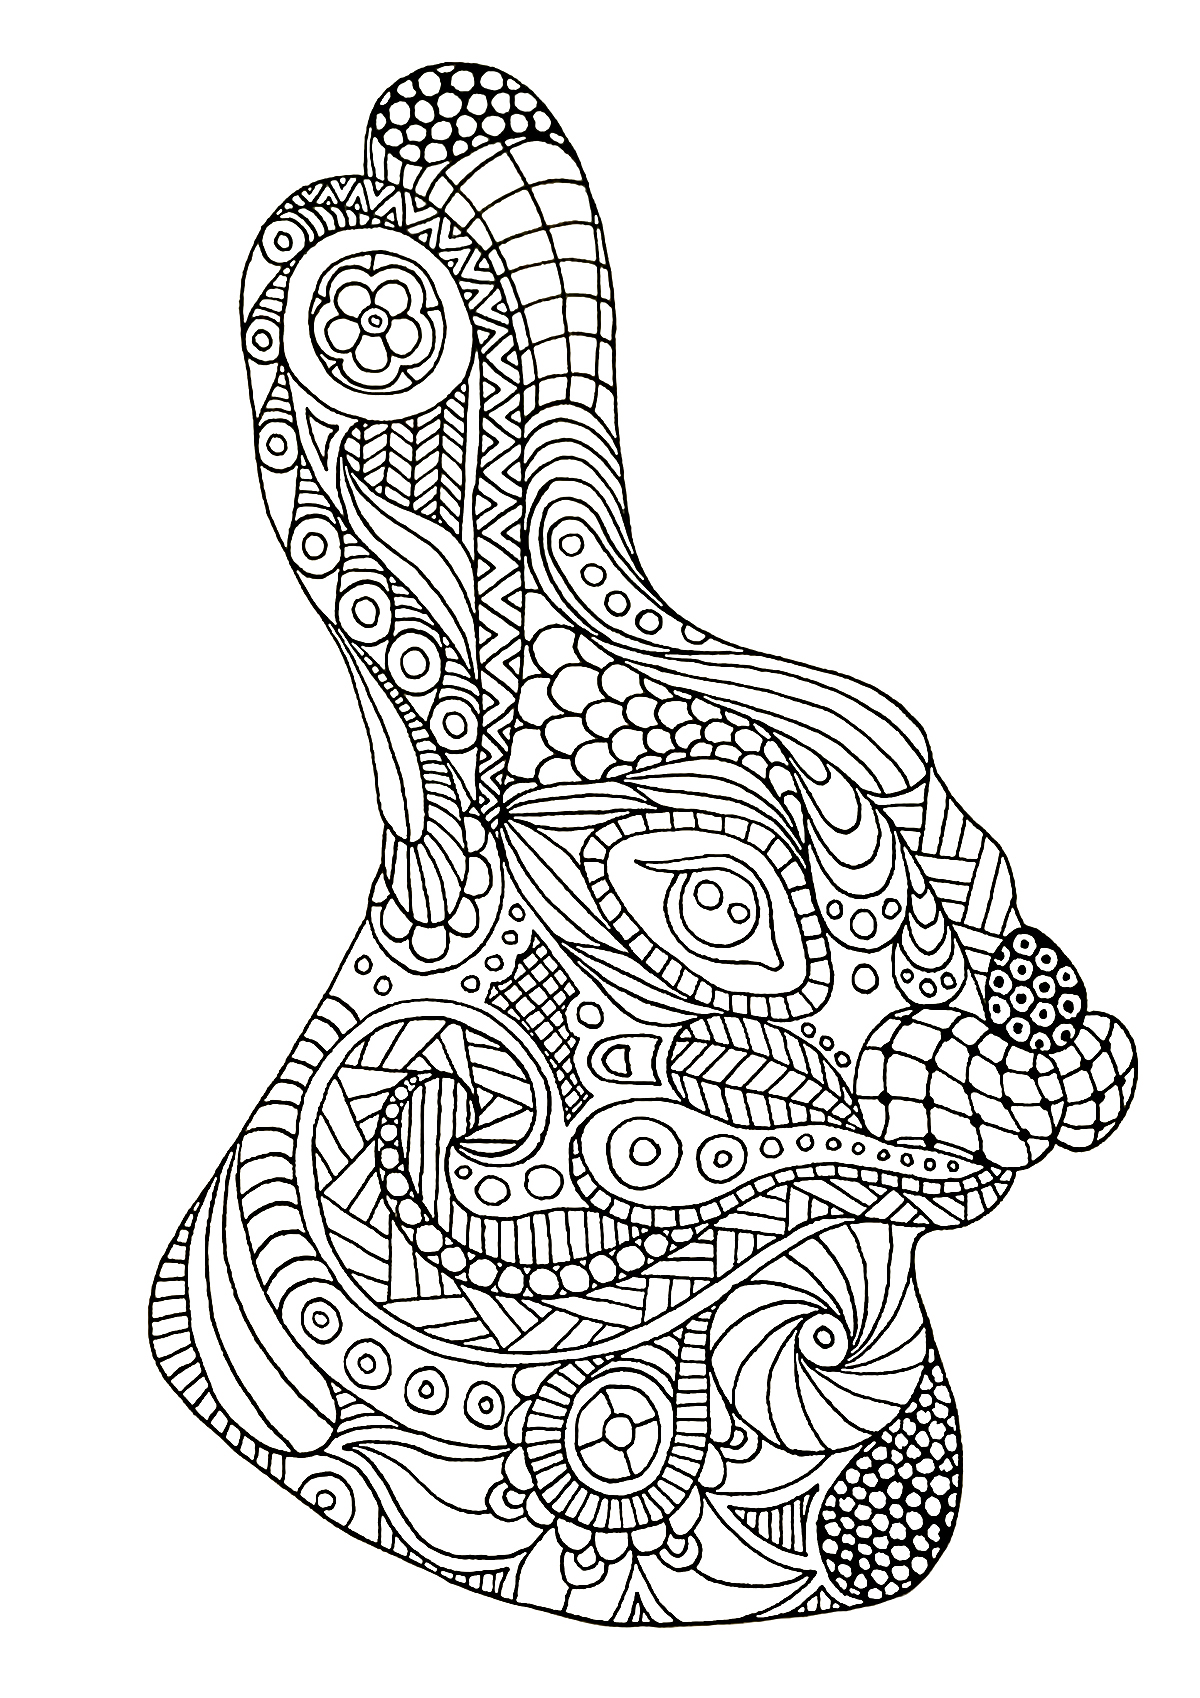 Colorear la cabeza de Conejo (Zentangle)